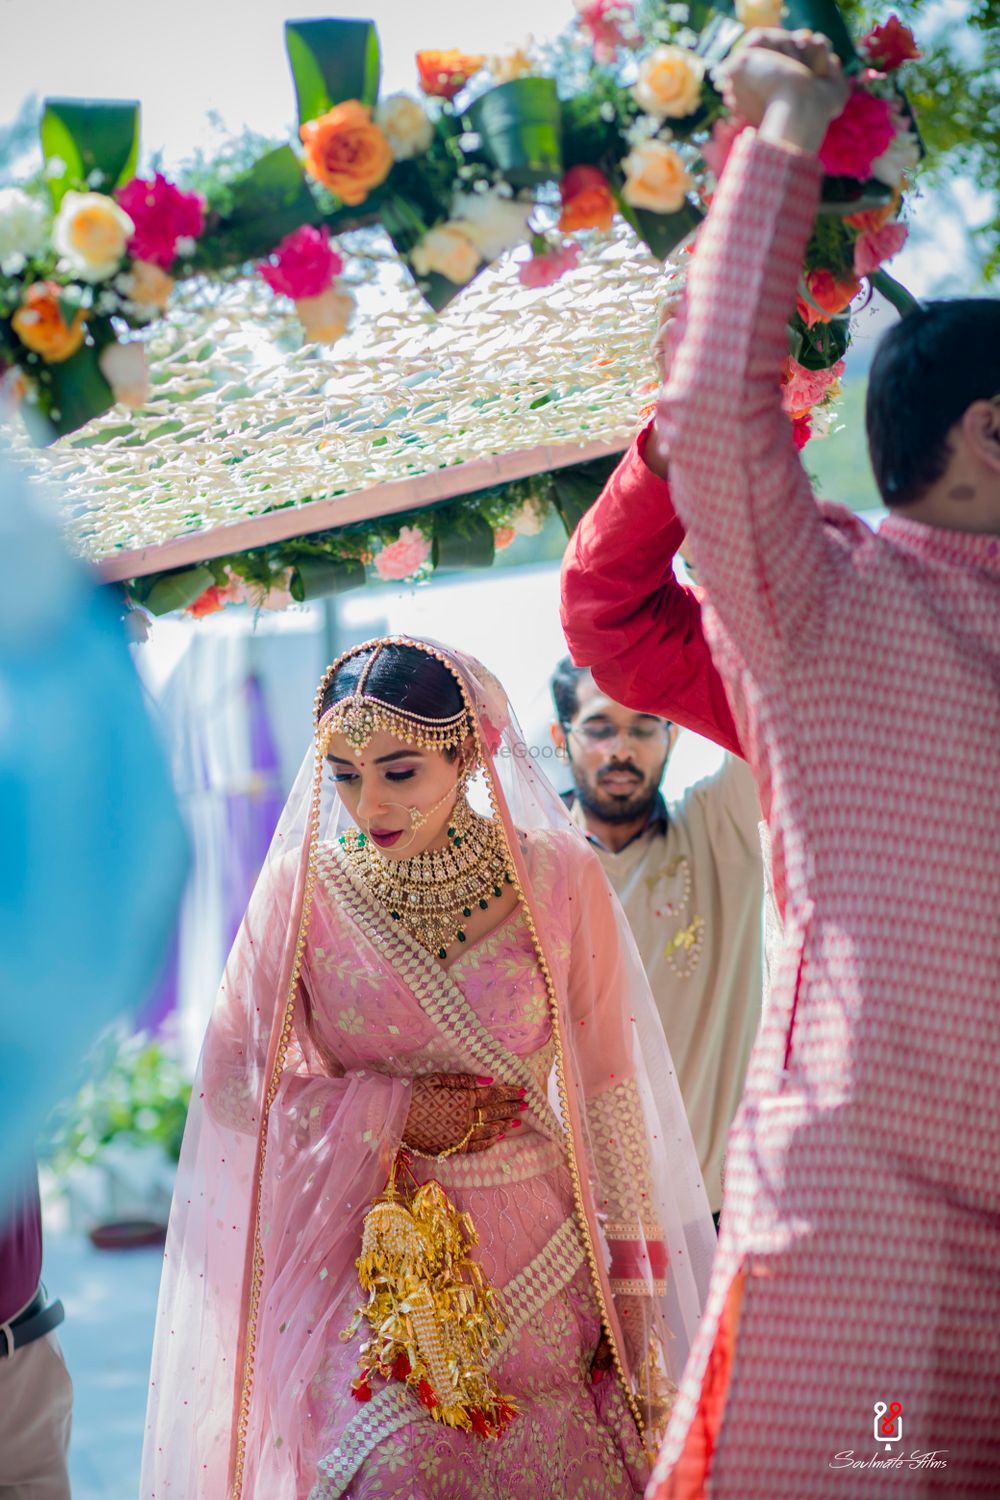 Photo of A bride in a light pink lehenga under a phoolon ki chaadar